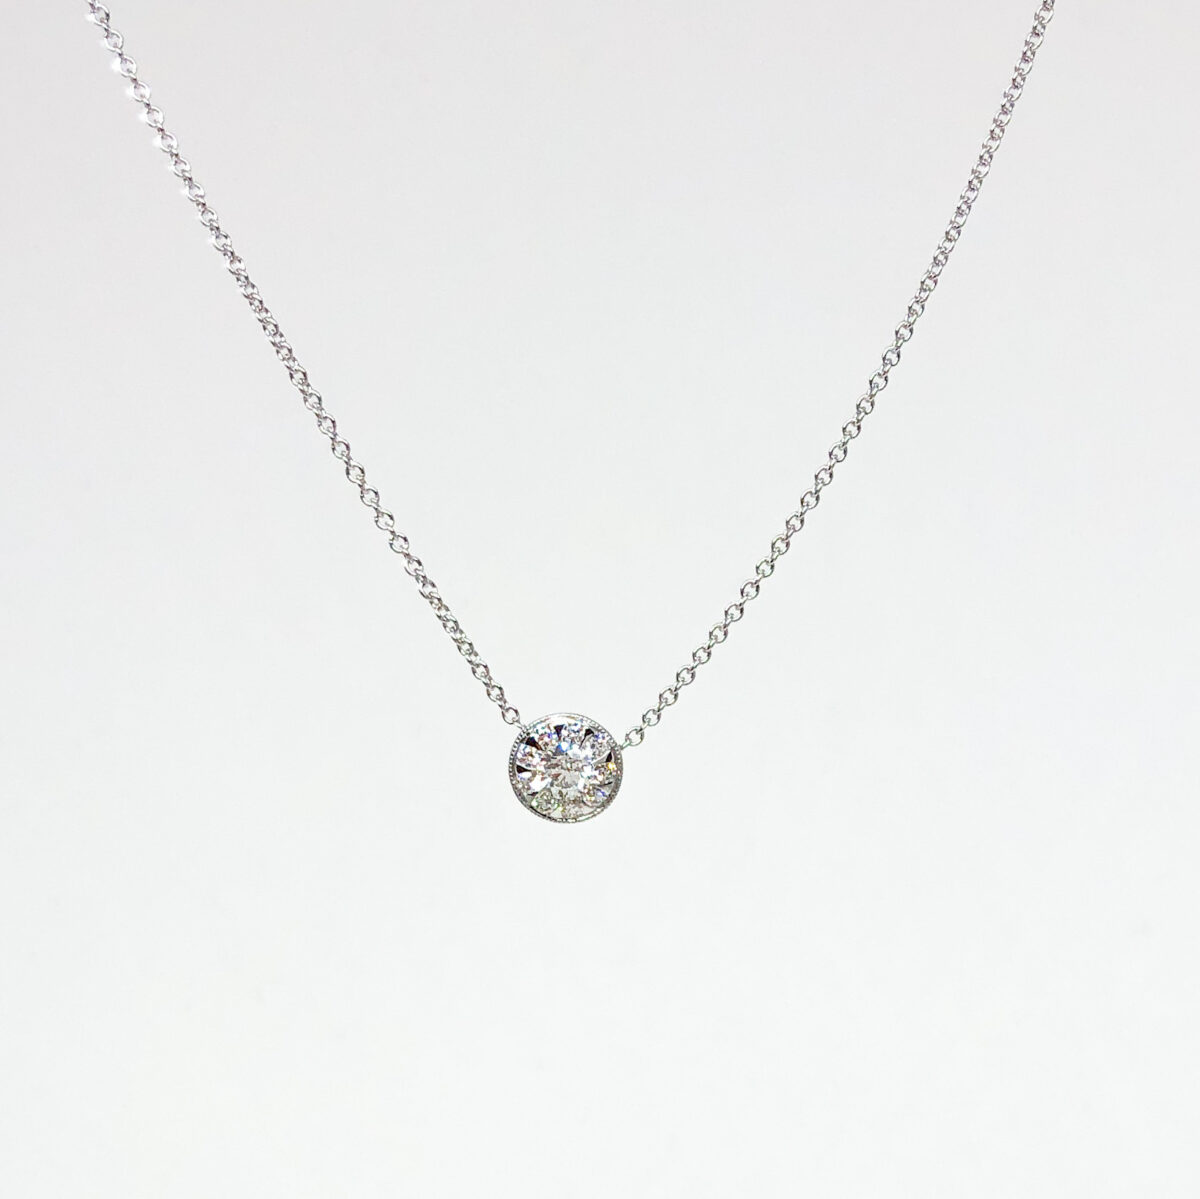 White Gold and Sunburst Diamond Necklace